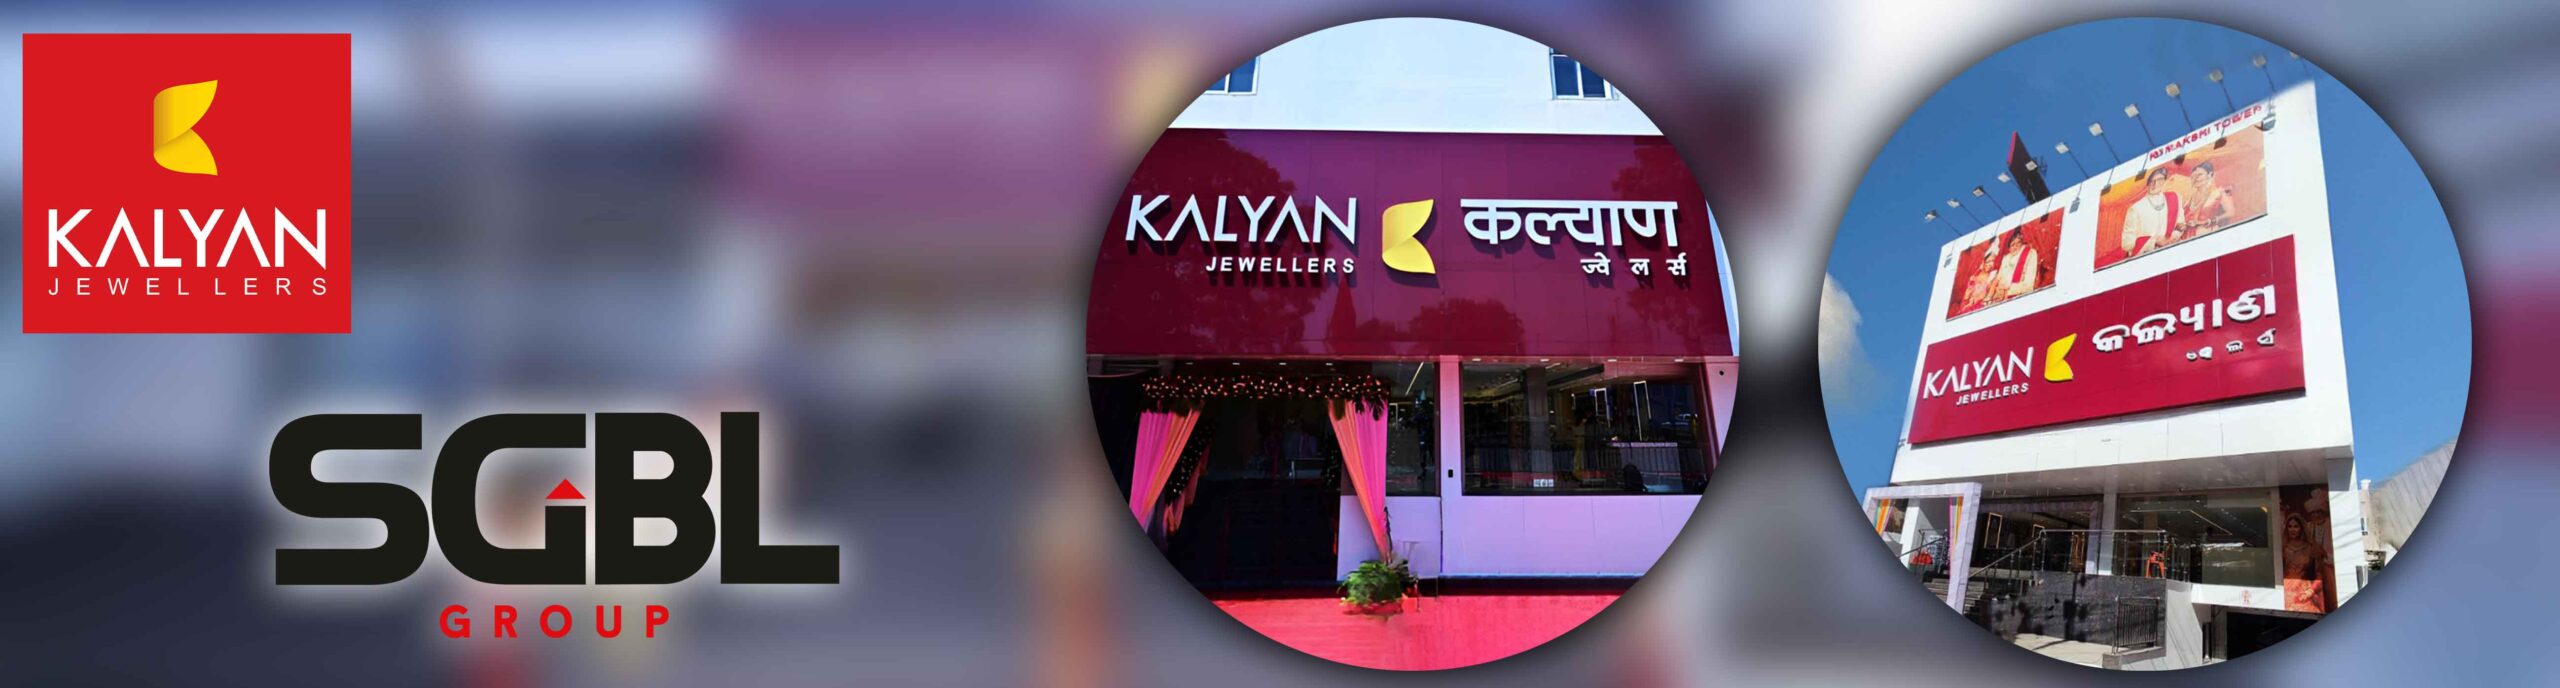 Kalyan-Jeweller-Home-Page-Pic